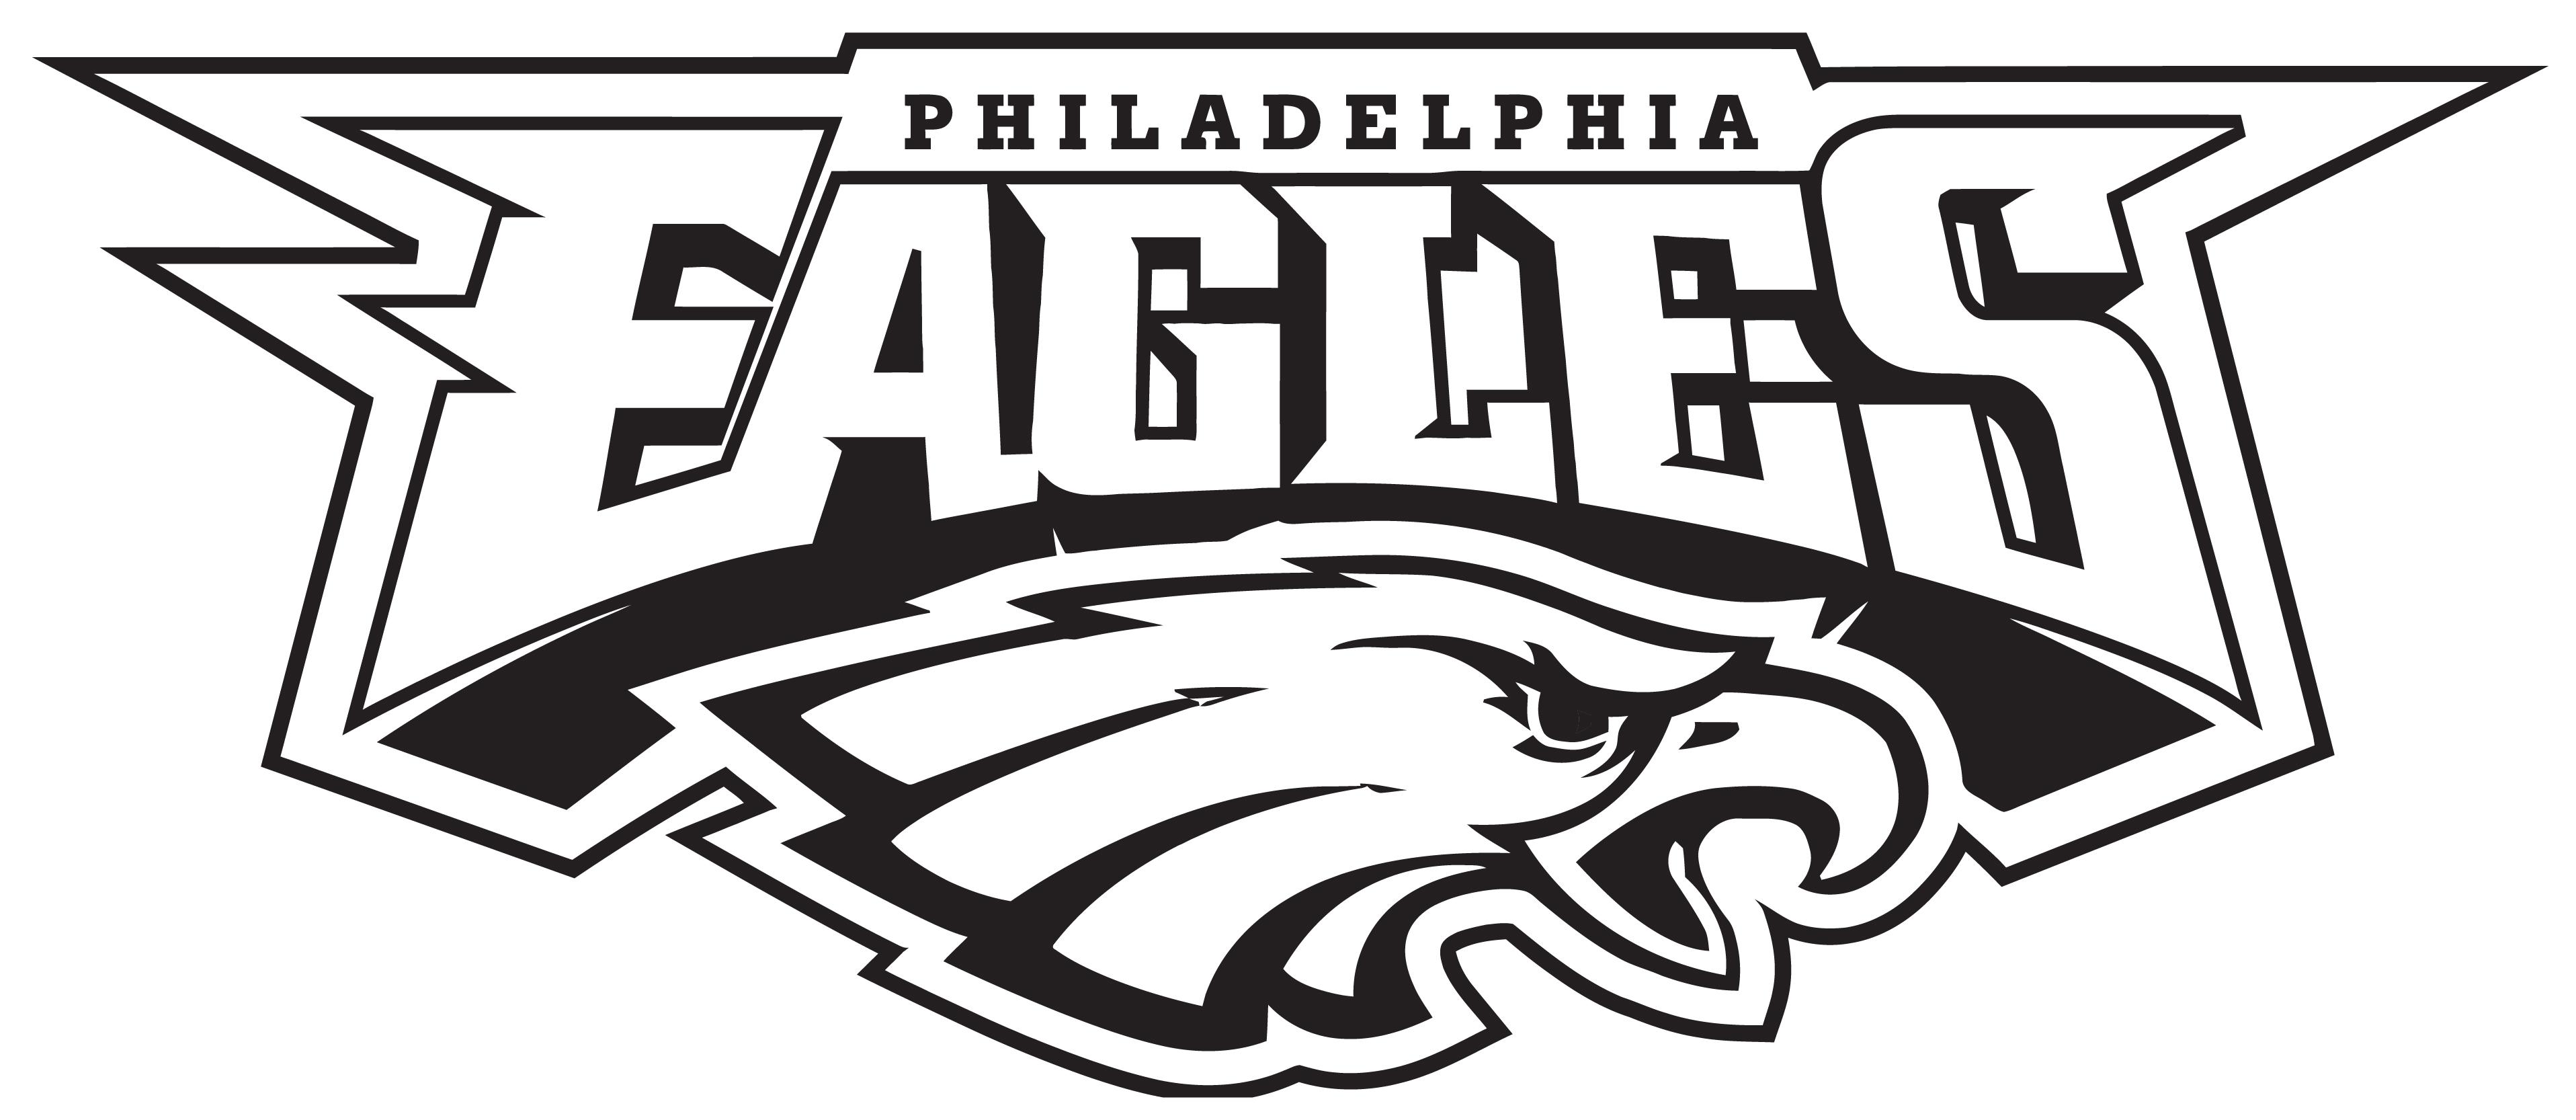 Philadelphia Eagles NFL. Emblem wall sticker.